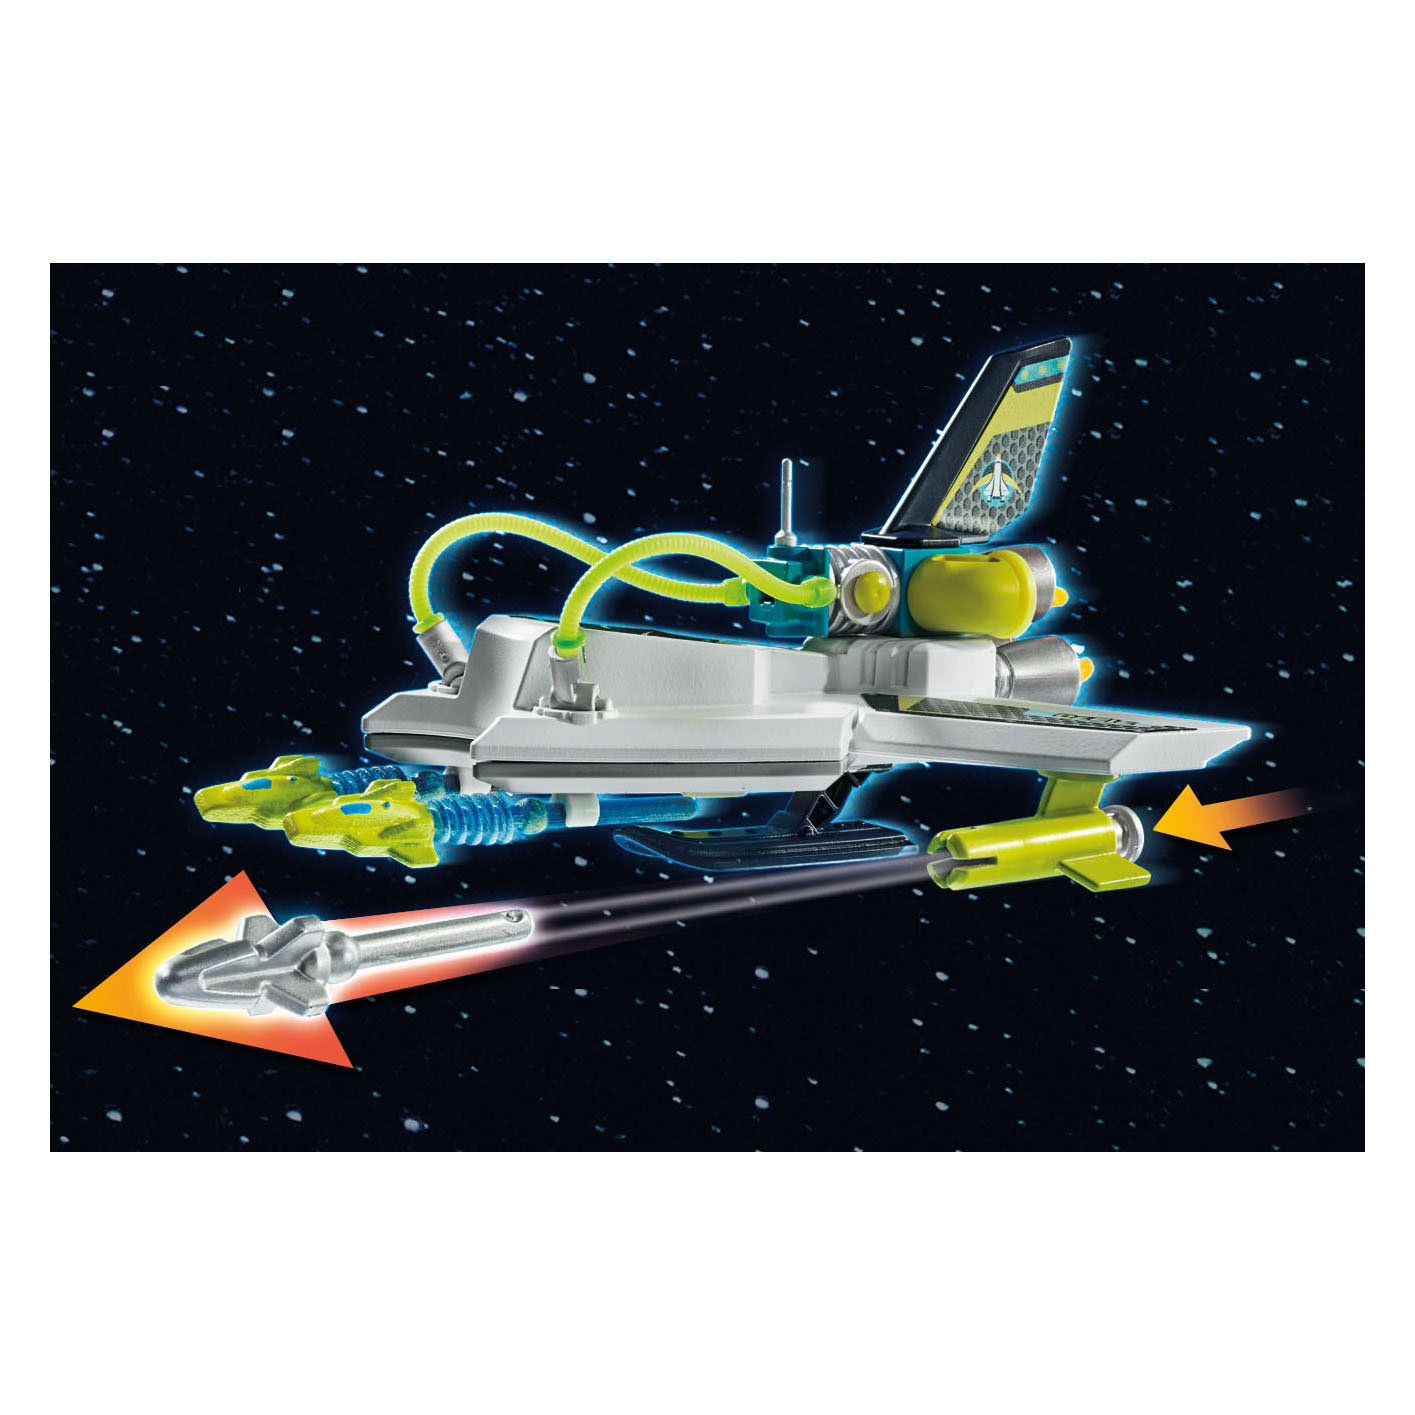 Playmobil Space Hightech-Weltraumdrohnen-Promopaket – 71370